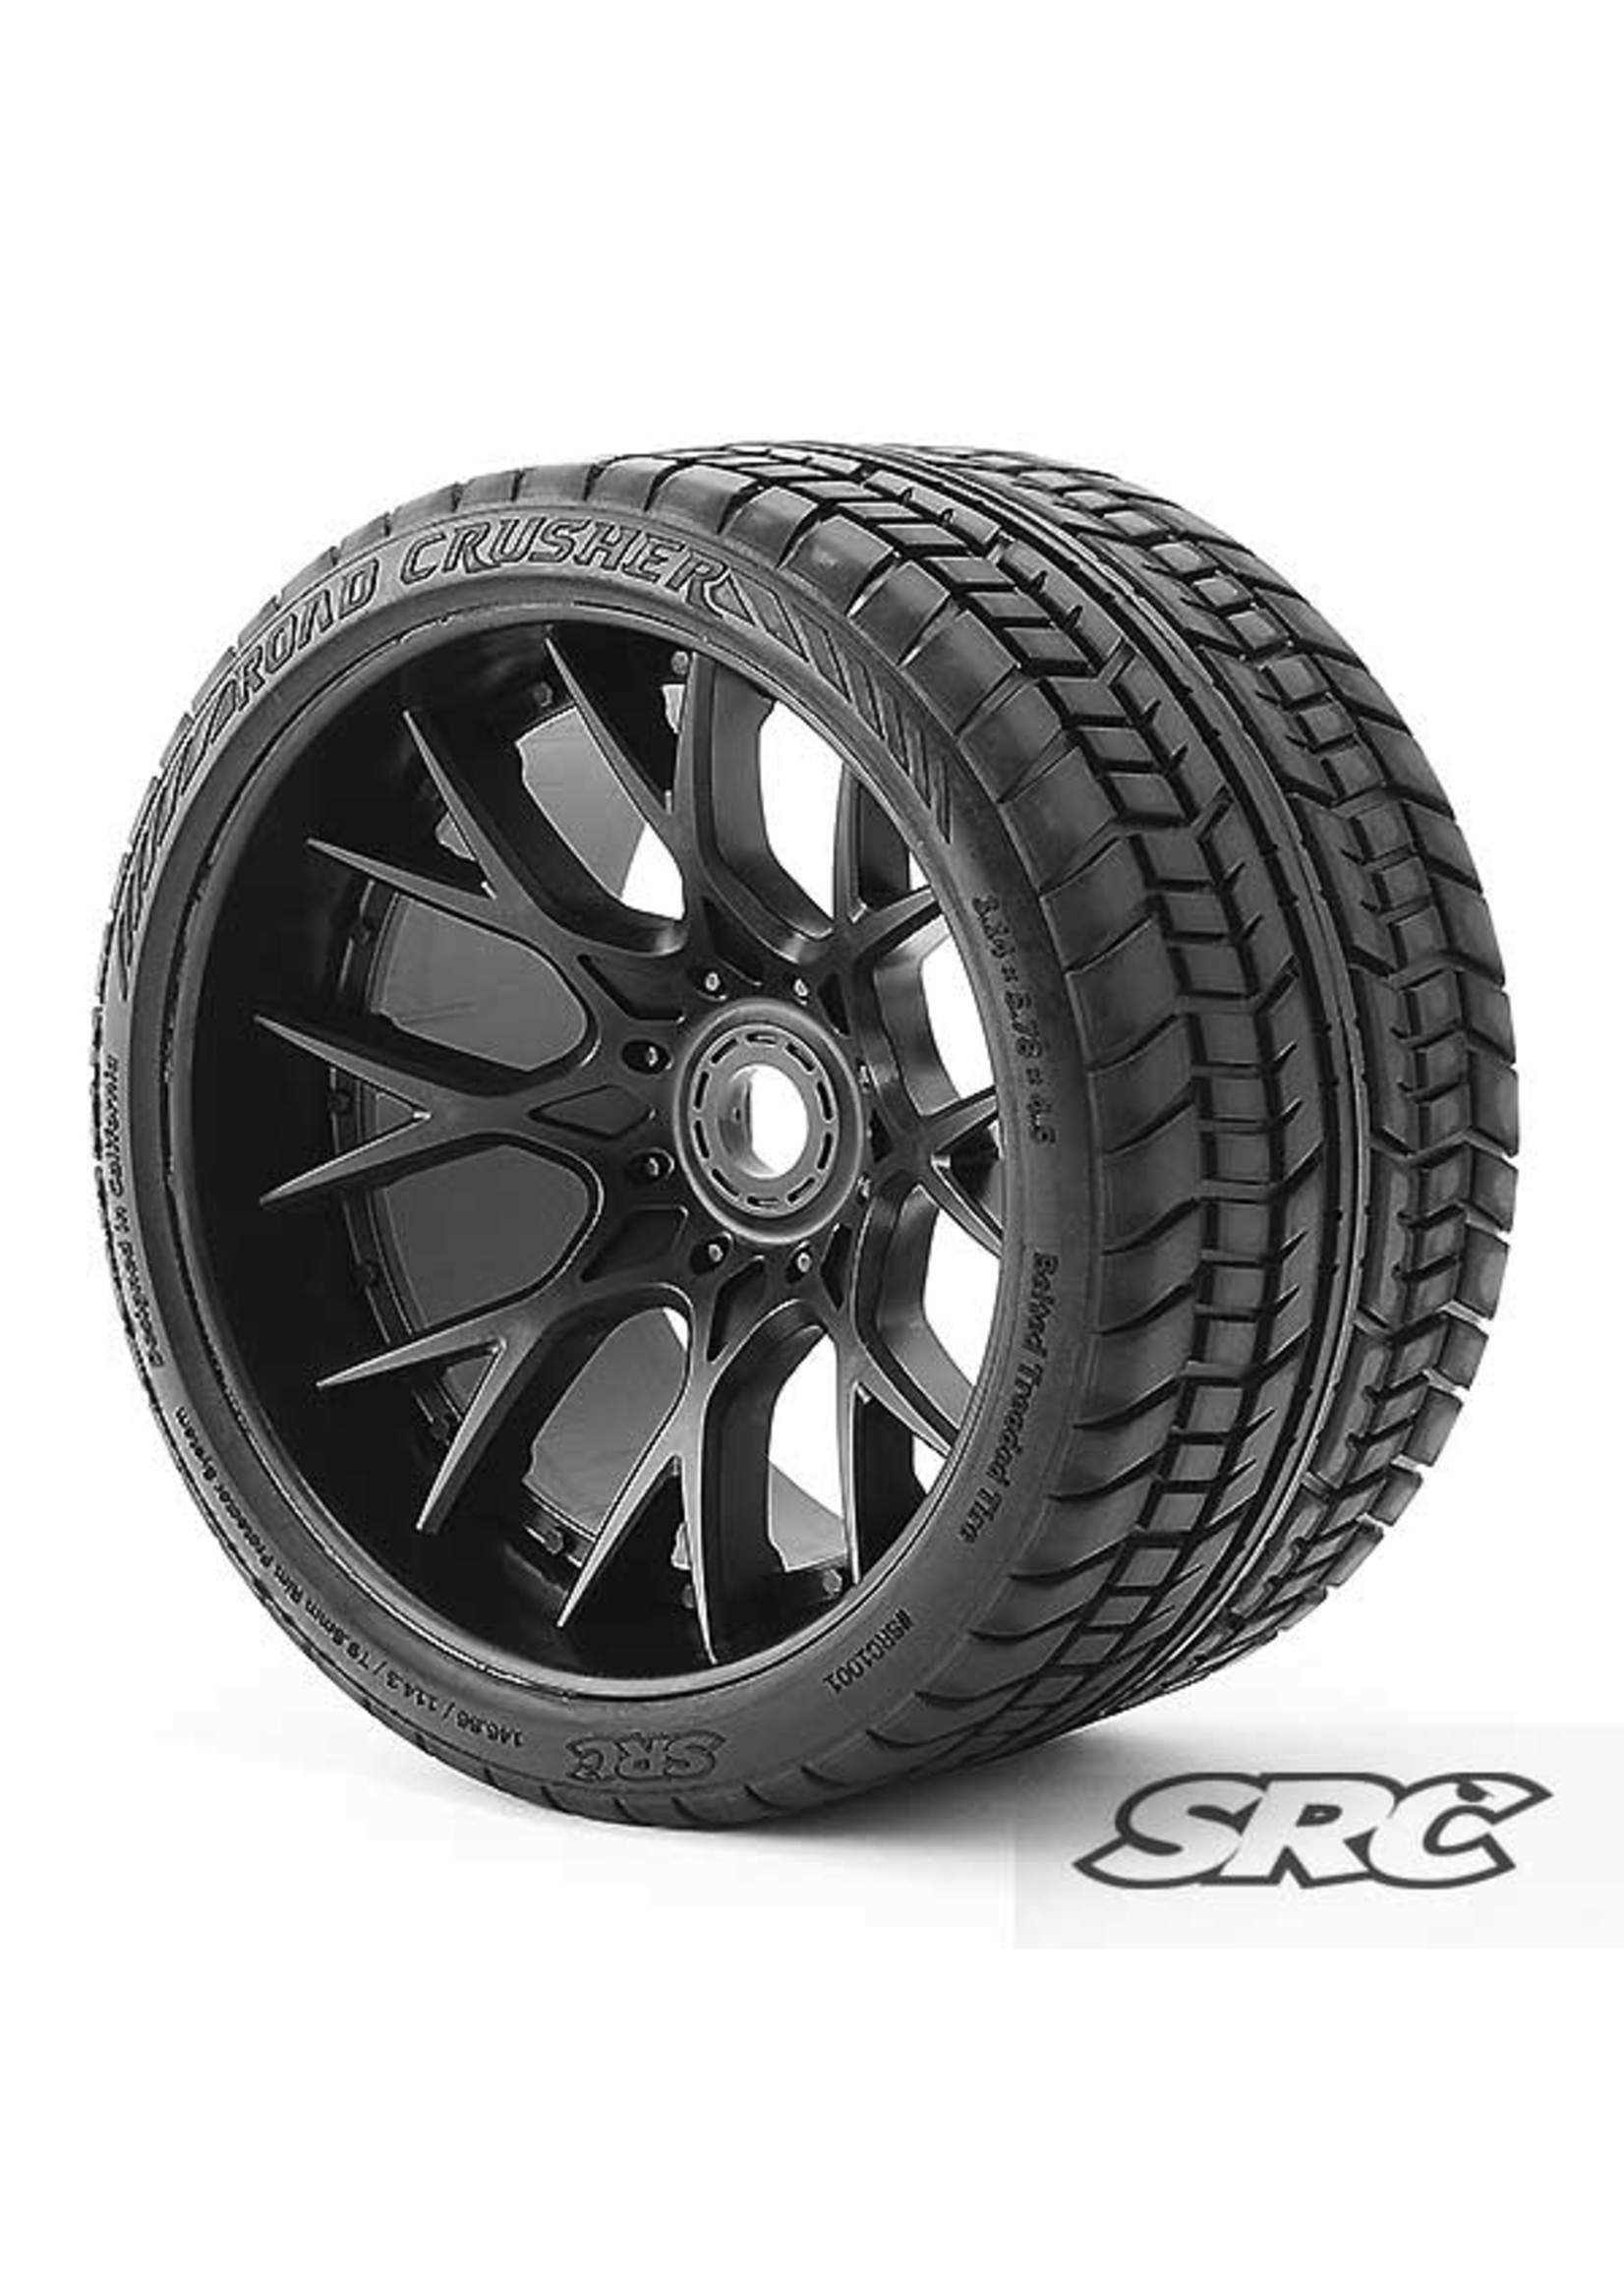 SWEEP C1001B - MT Road Crusher Tire Black (rop)